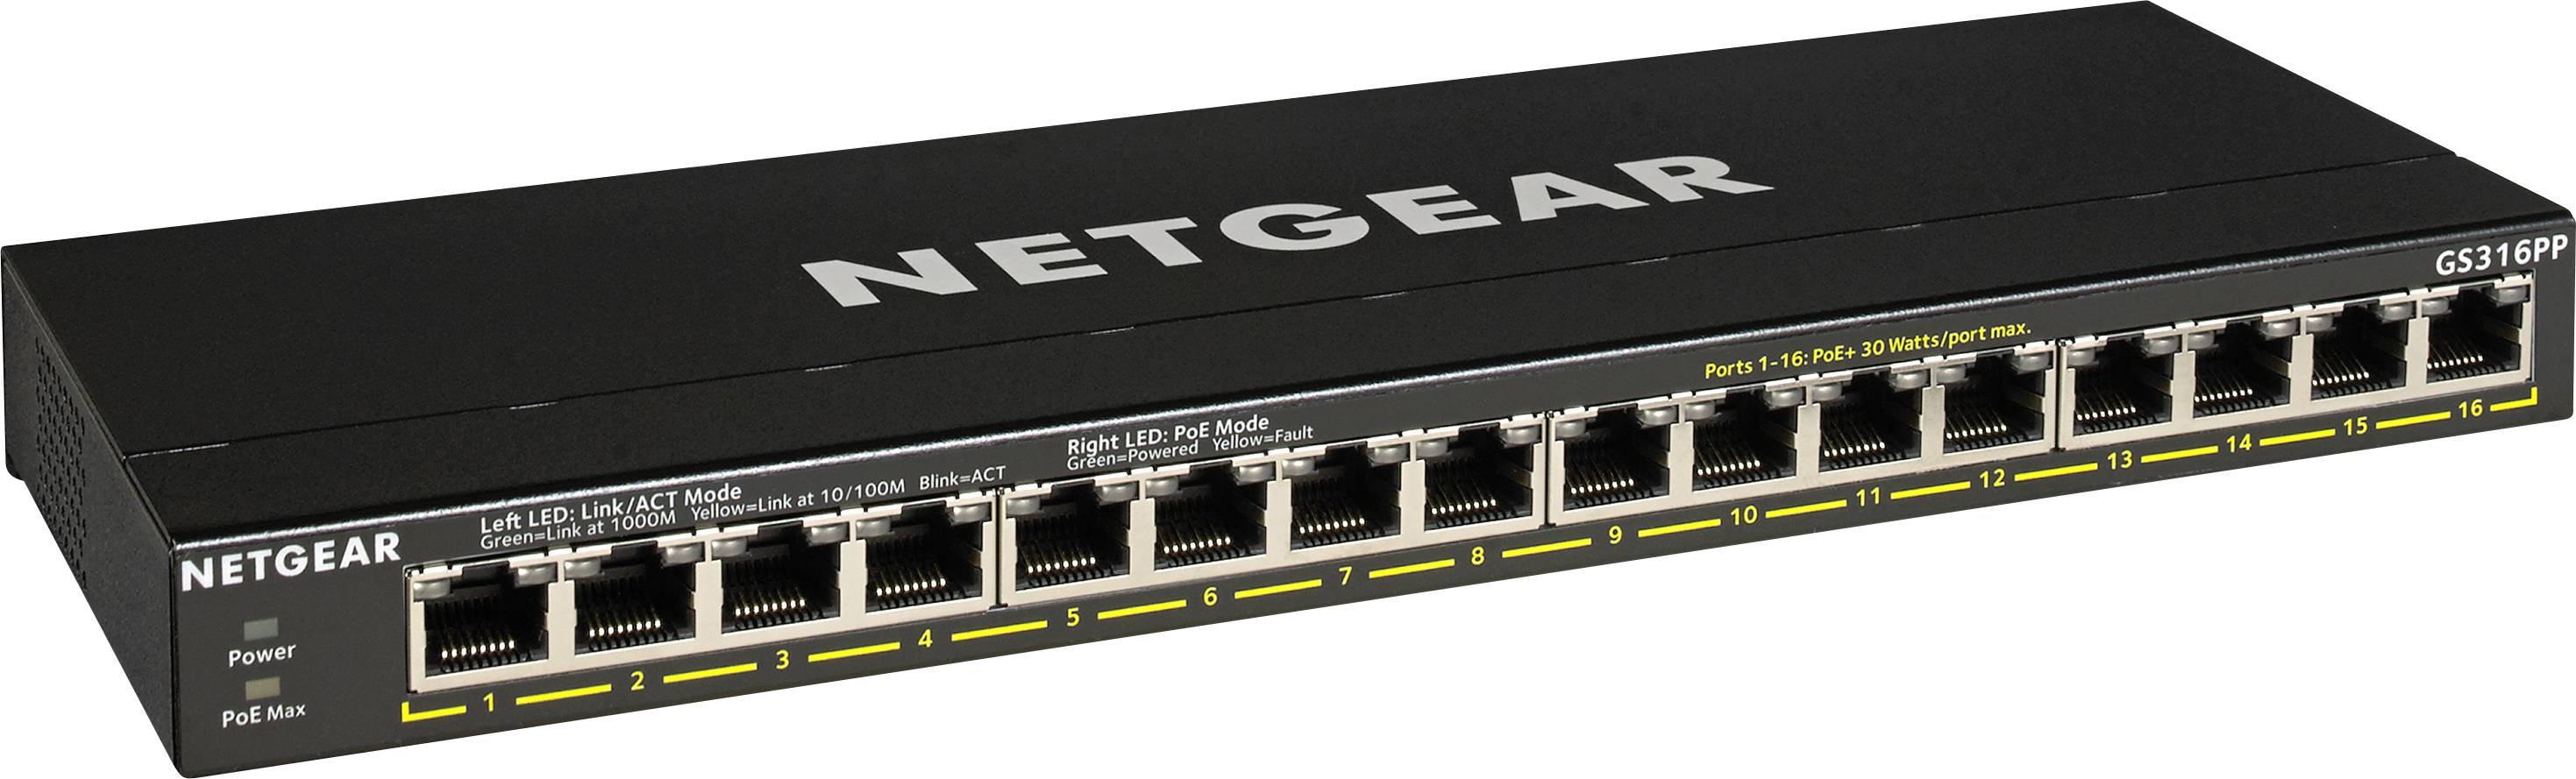 NETGEAR GS316PP unmngd 16port Gigabit Ethern high perfrmnc PoE+switch, 183W PoE+bdgt, fanless, plug/